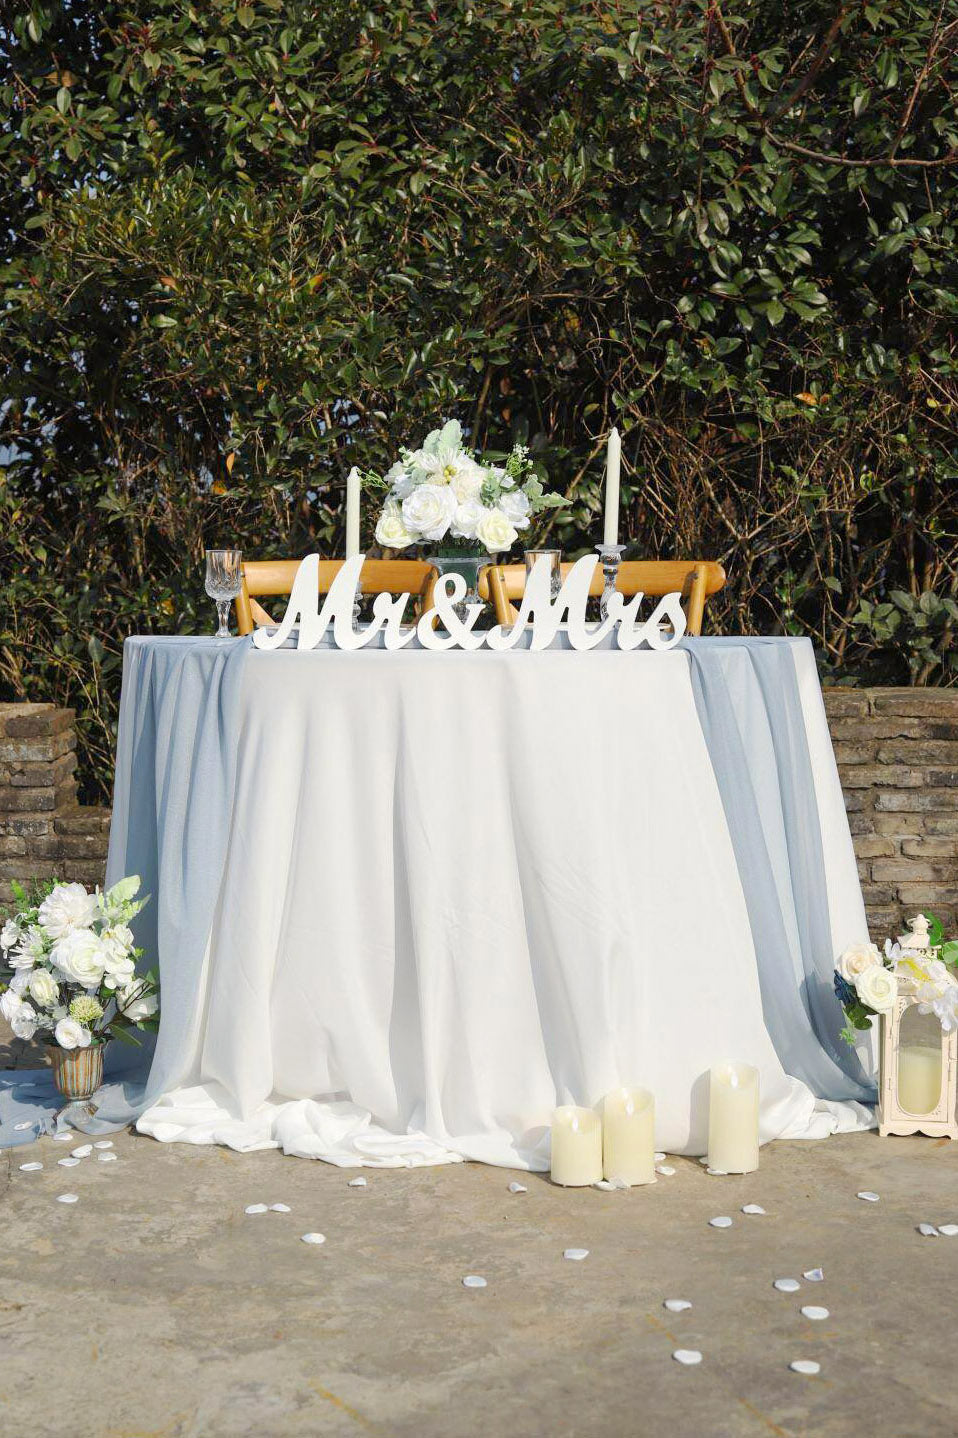 Wedding Reception & Altar Decor, Chiffon Wedding Table Runner 29"w x 10ft- Gray